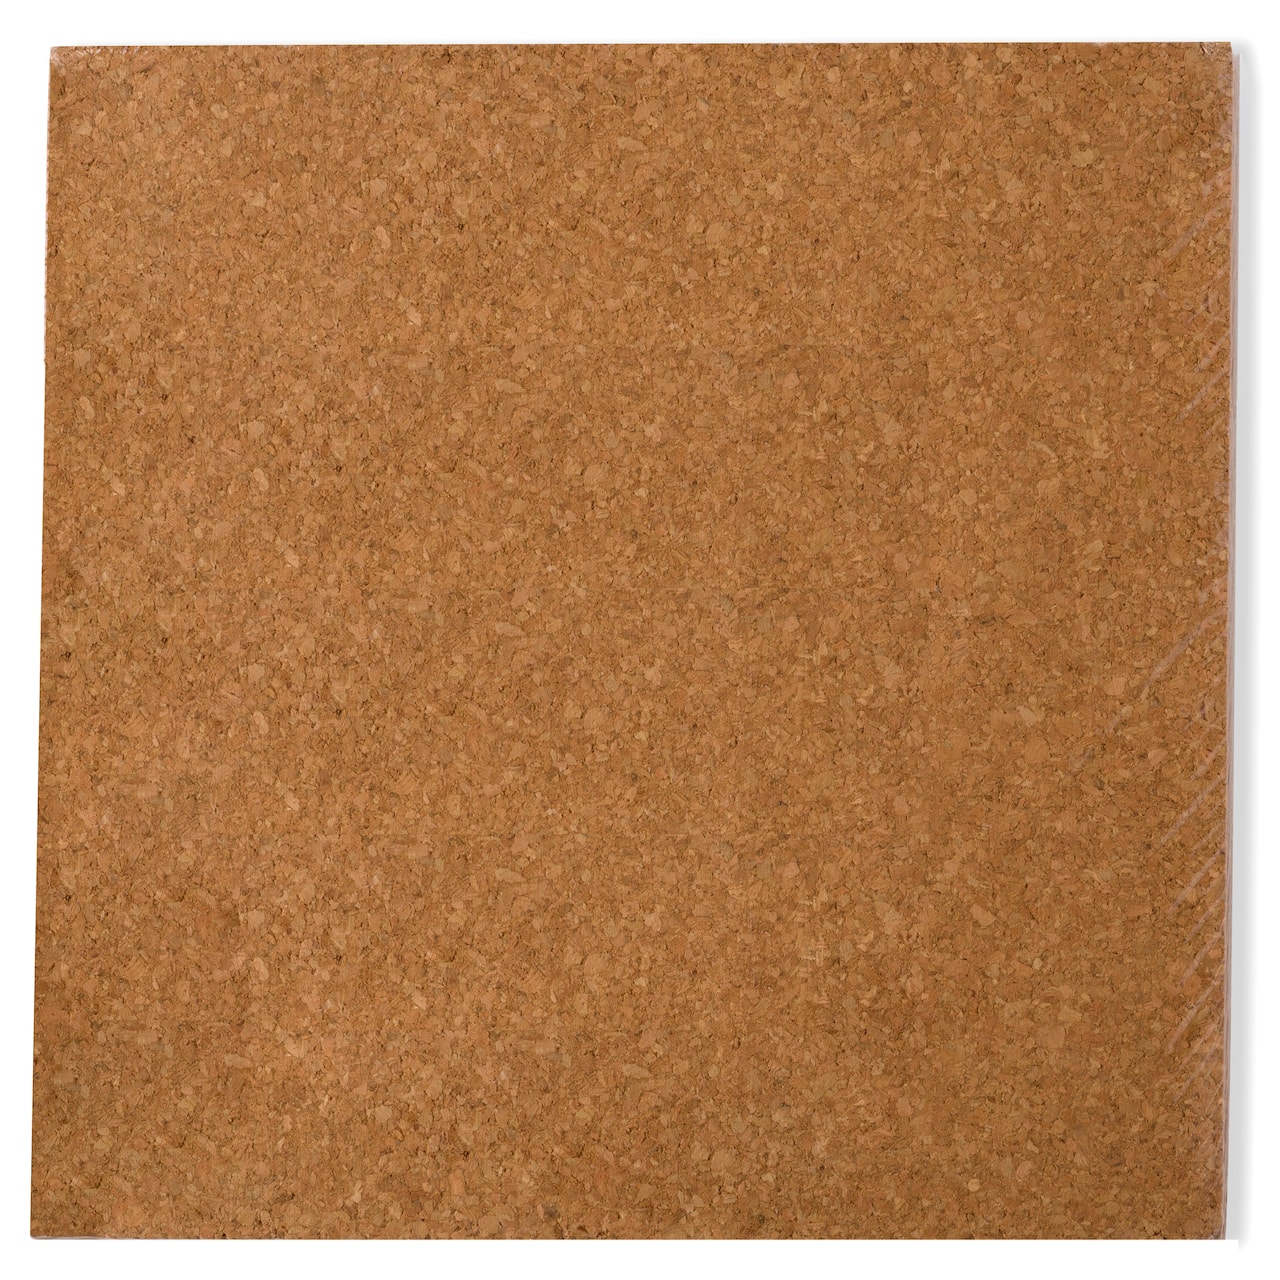 8 Packs: 4 ct. (32 total) 12 Cork Tiles by B2C®